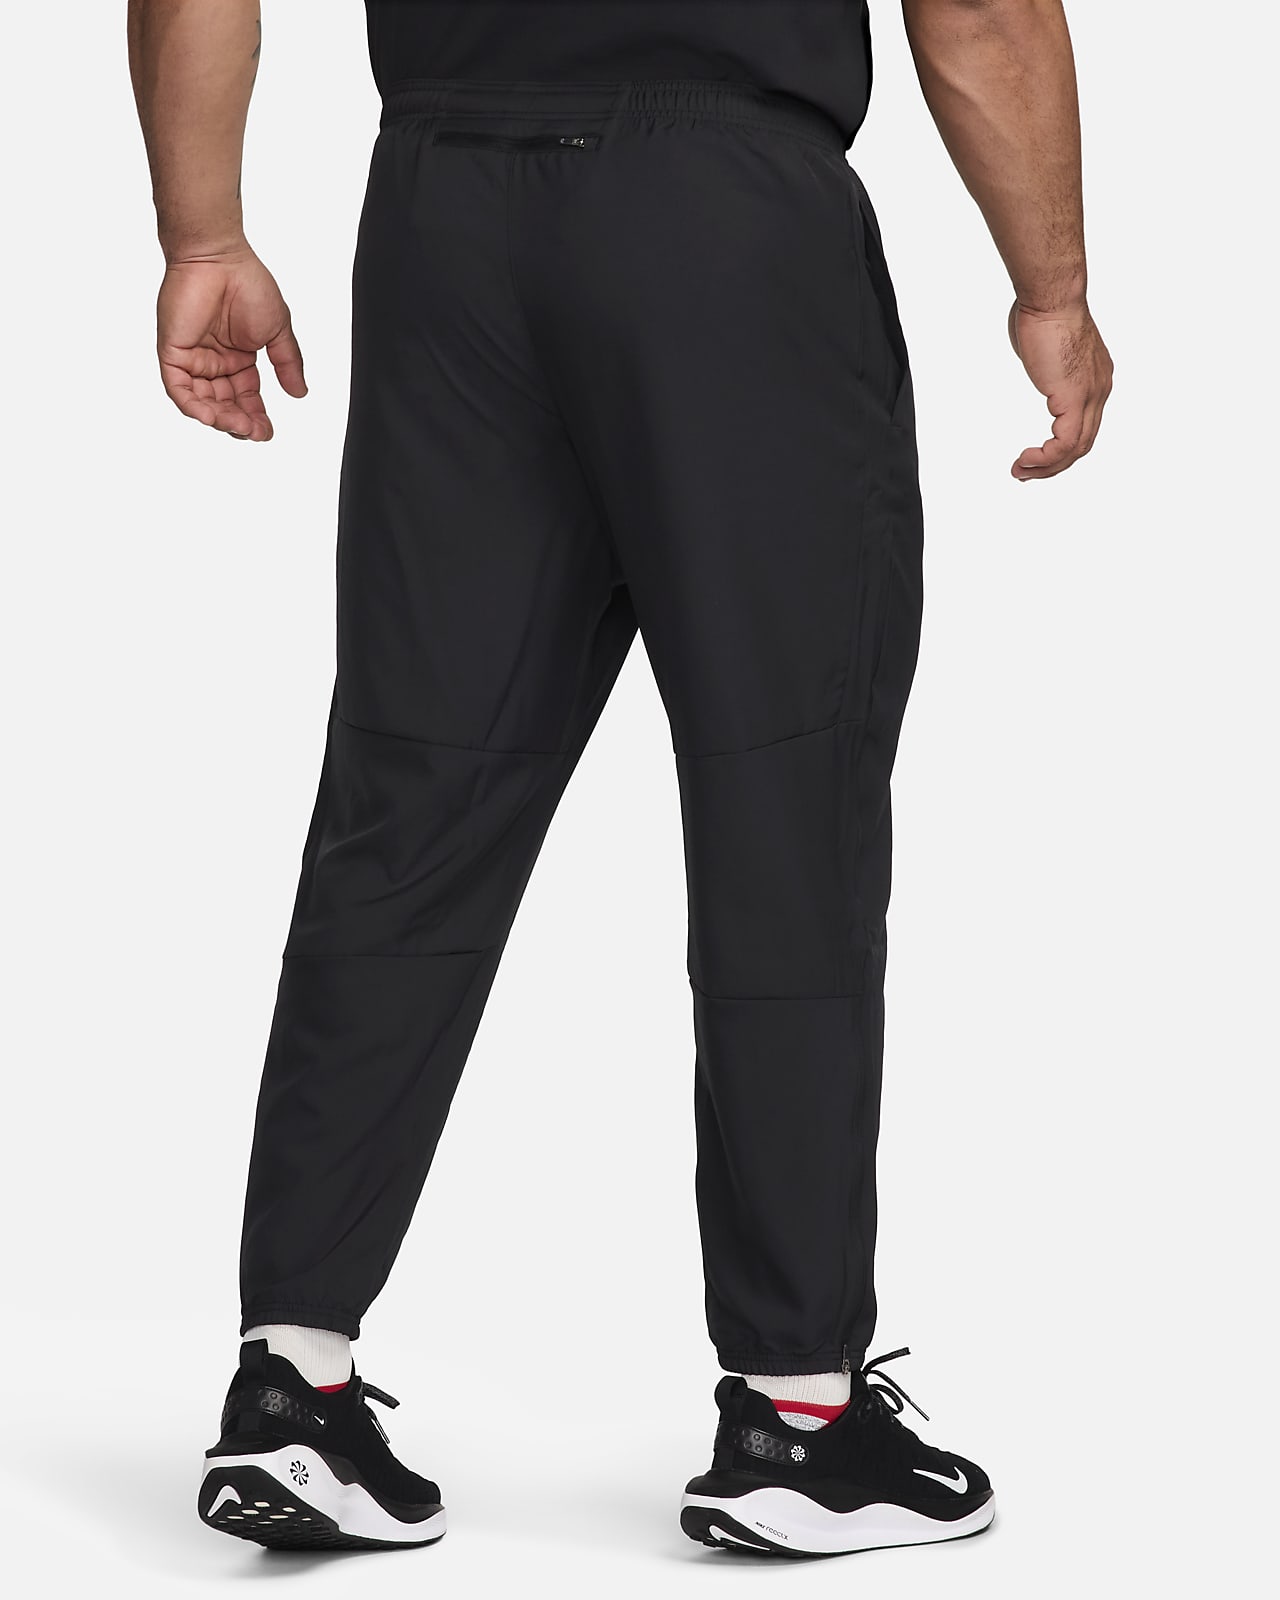 Nike Challenger Flash Men's Running Pants - Black